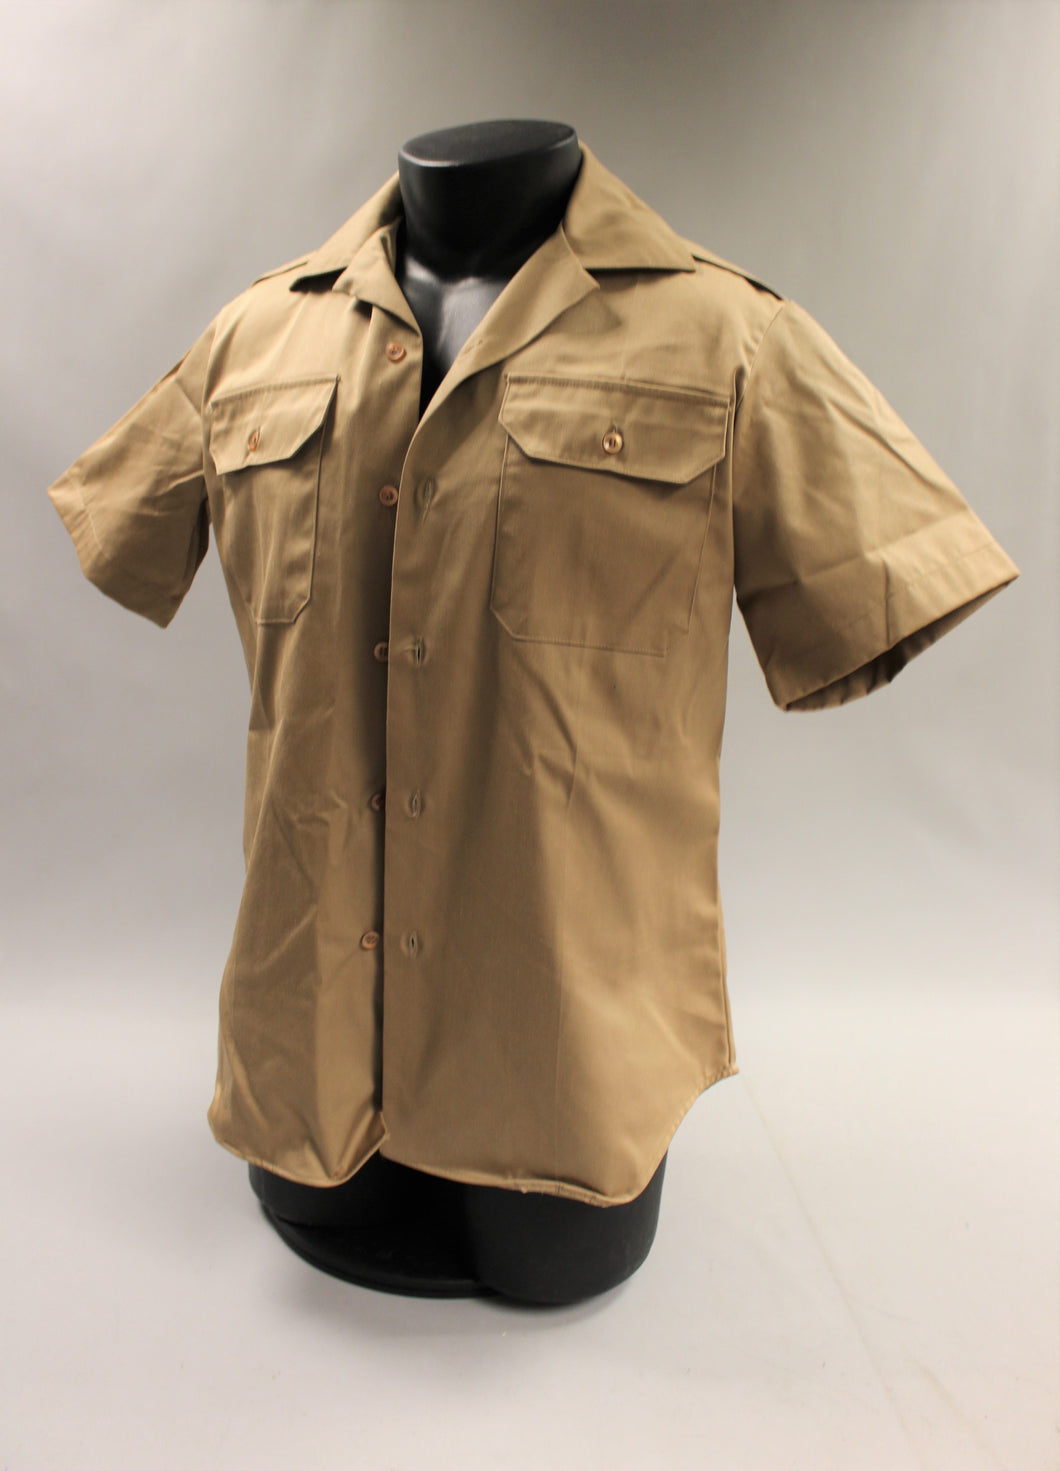 Men's Army Tan Short Sleeve Shirt - Size Medium -Used